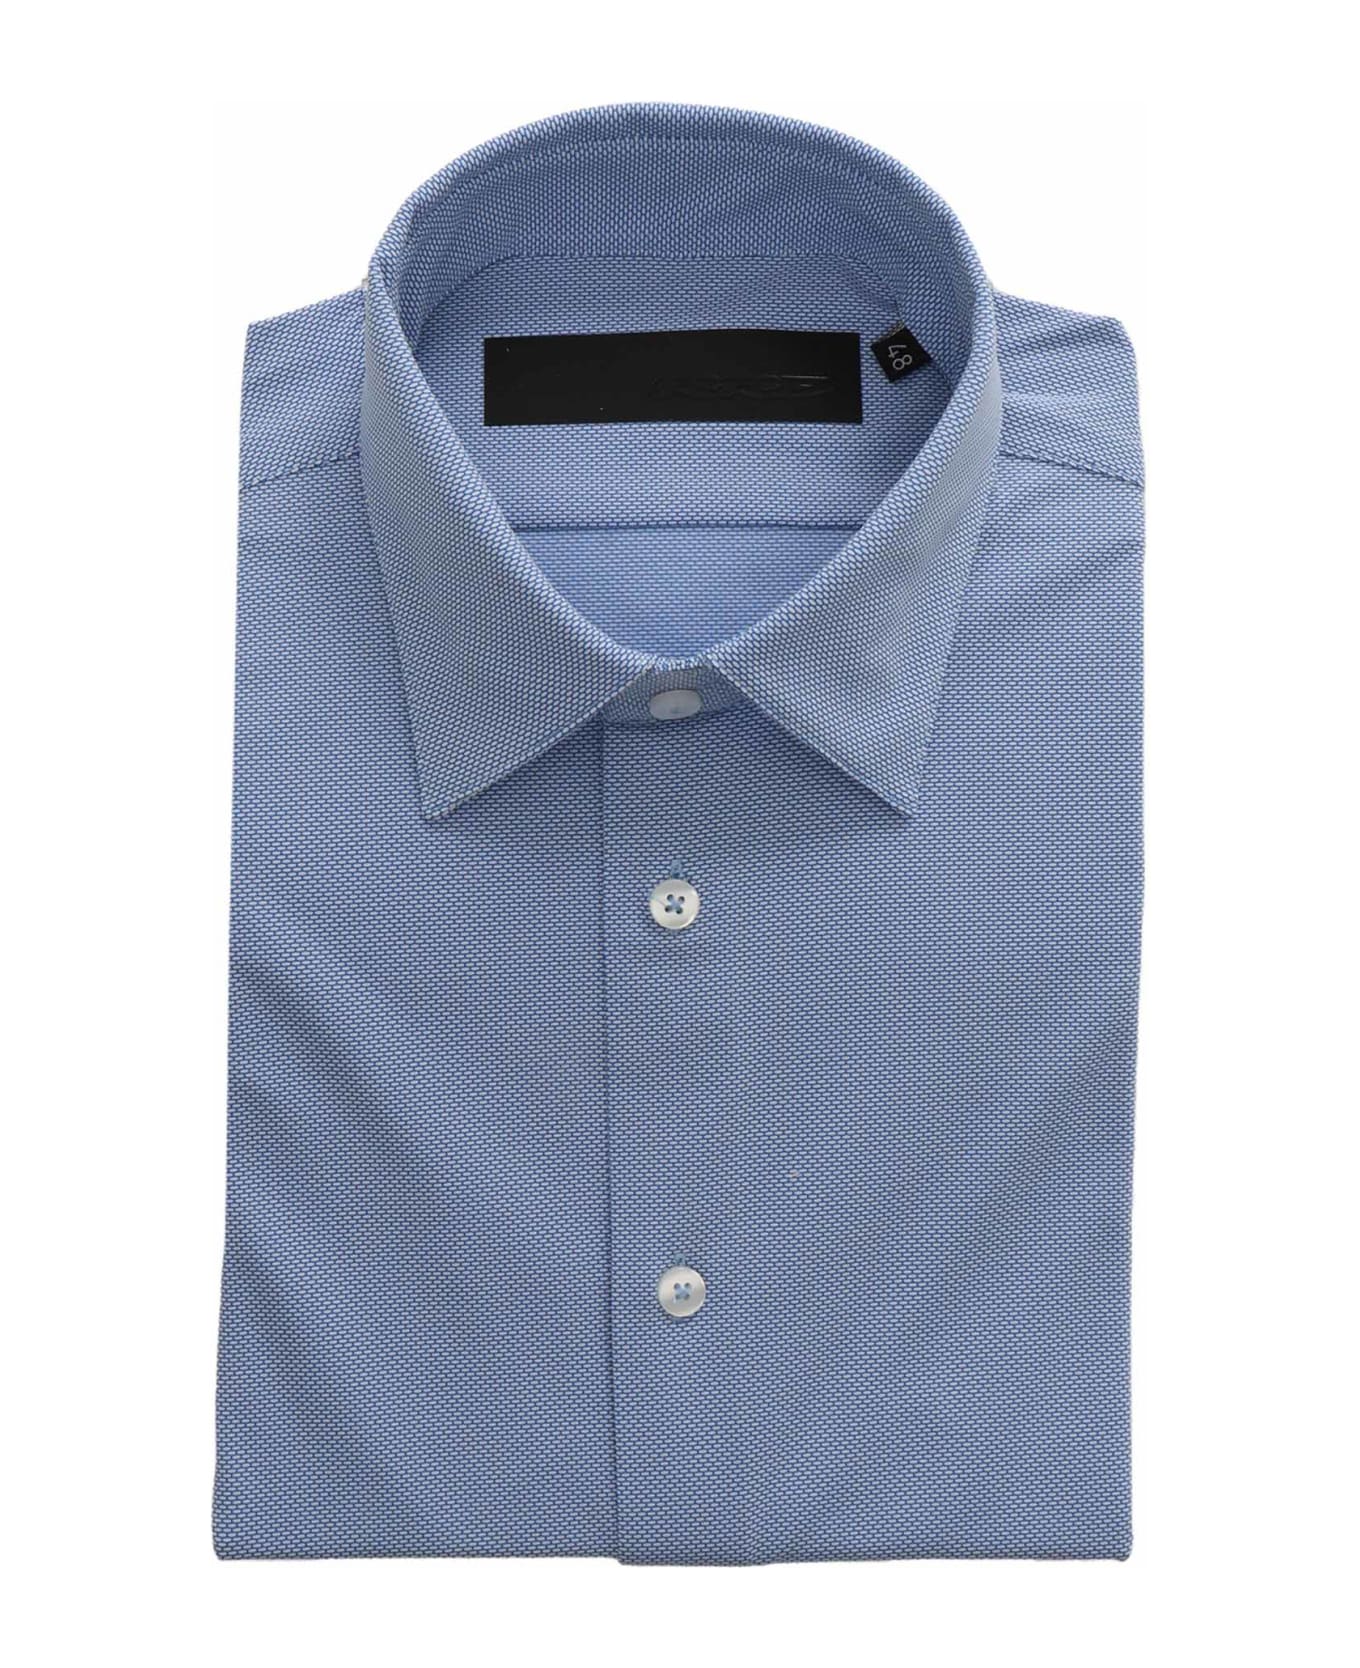 RRD - Roberto Ricci Design Jacquard Oxford Shirt - LIGHT BLUE シャツ